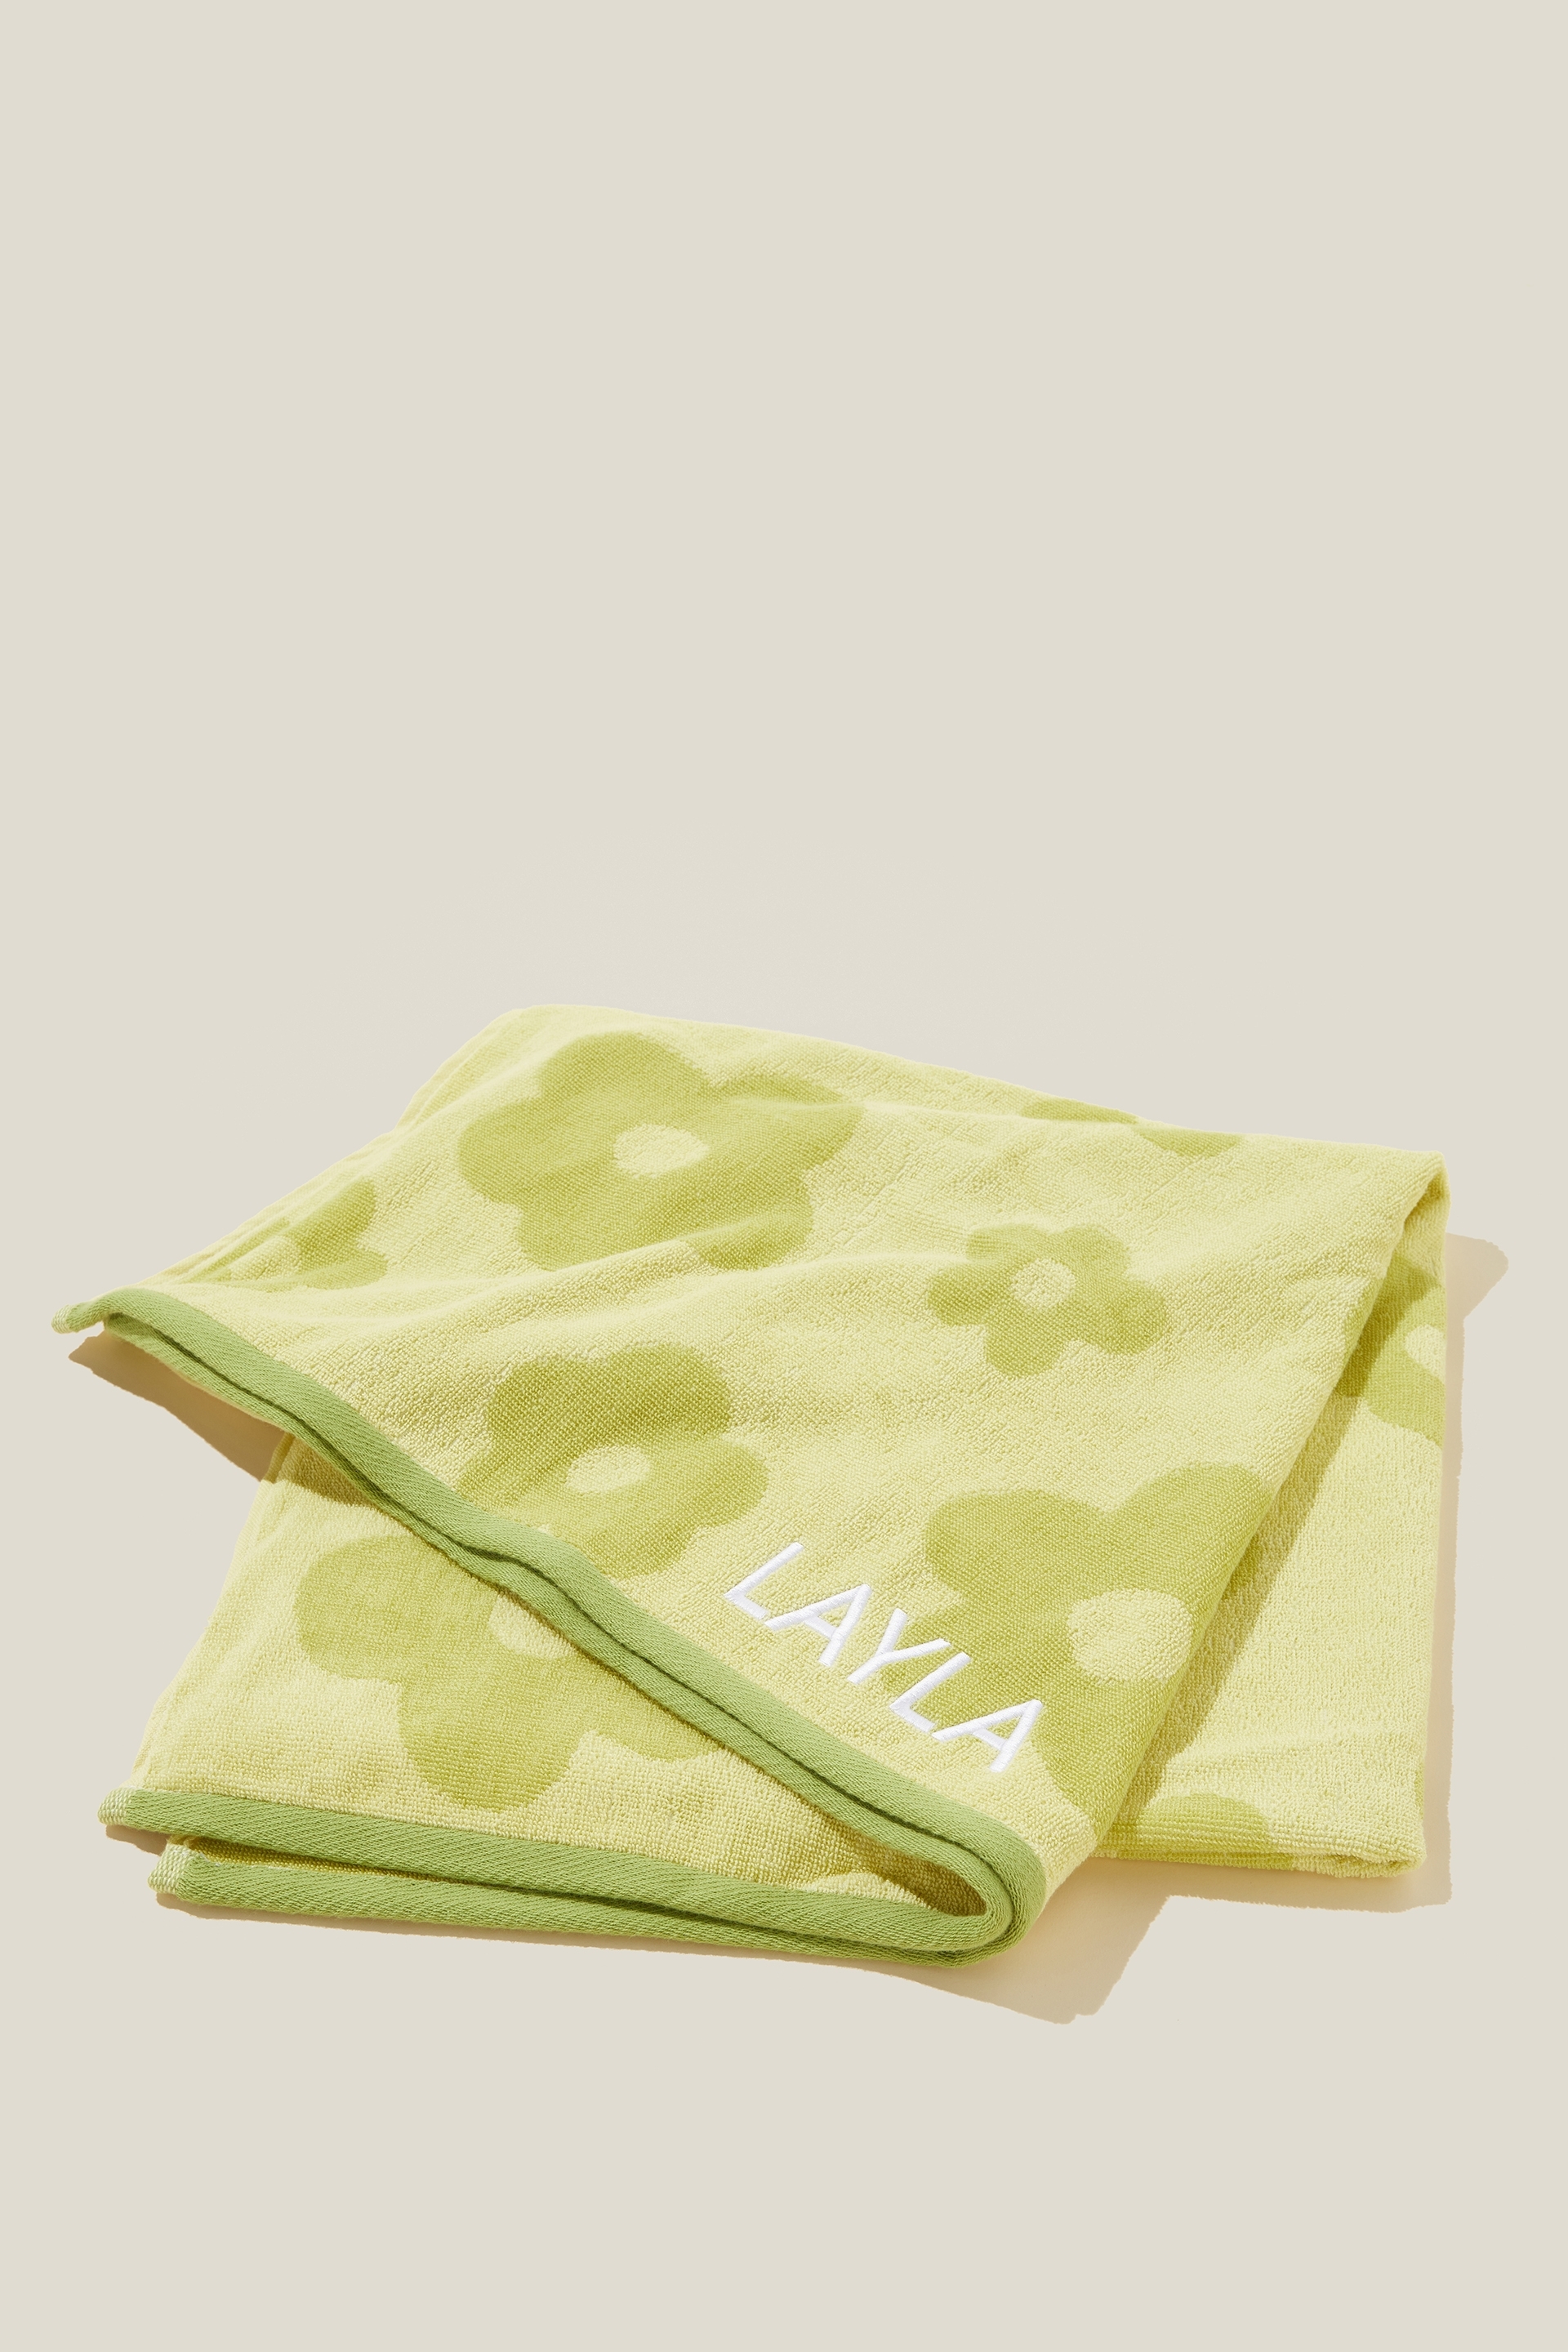 Rubi - Personalised Cotton Beach Towel - Palm green frankie daisy